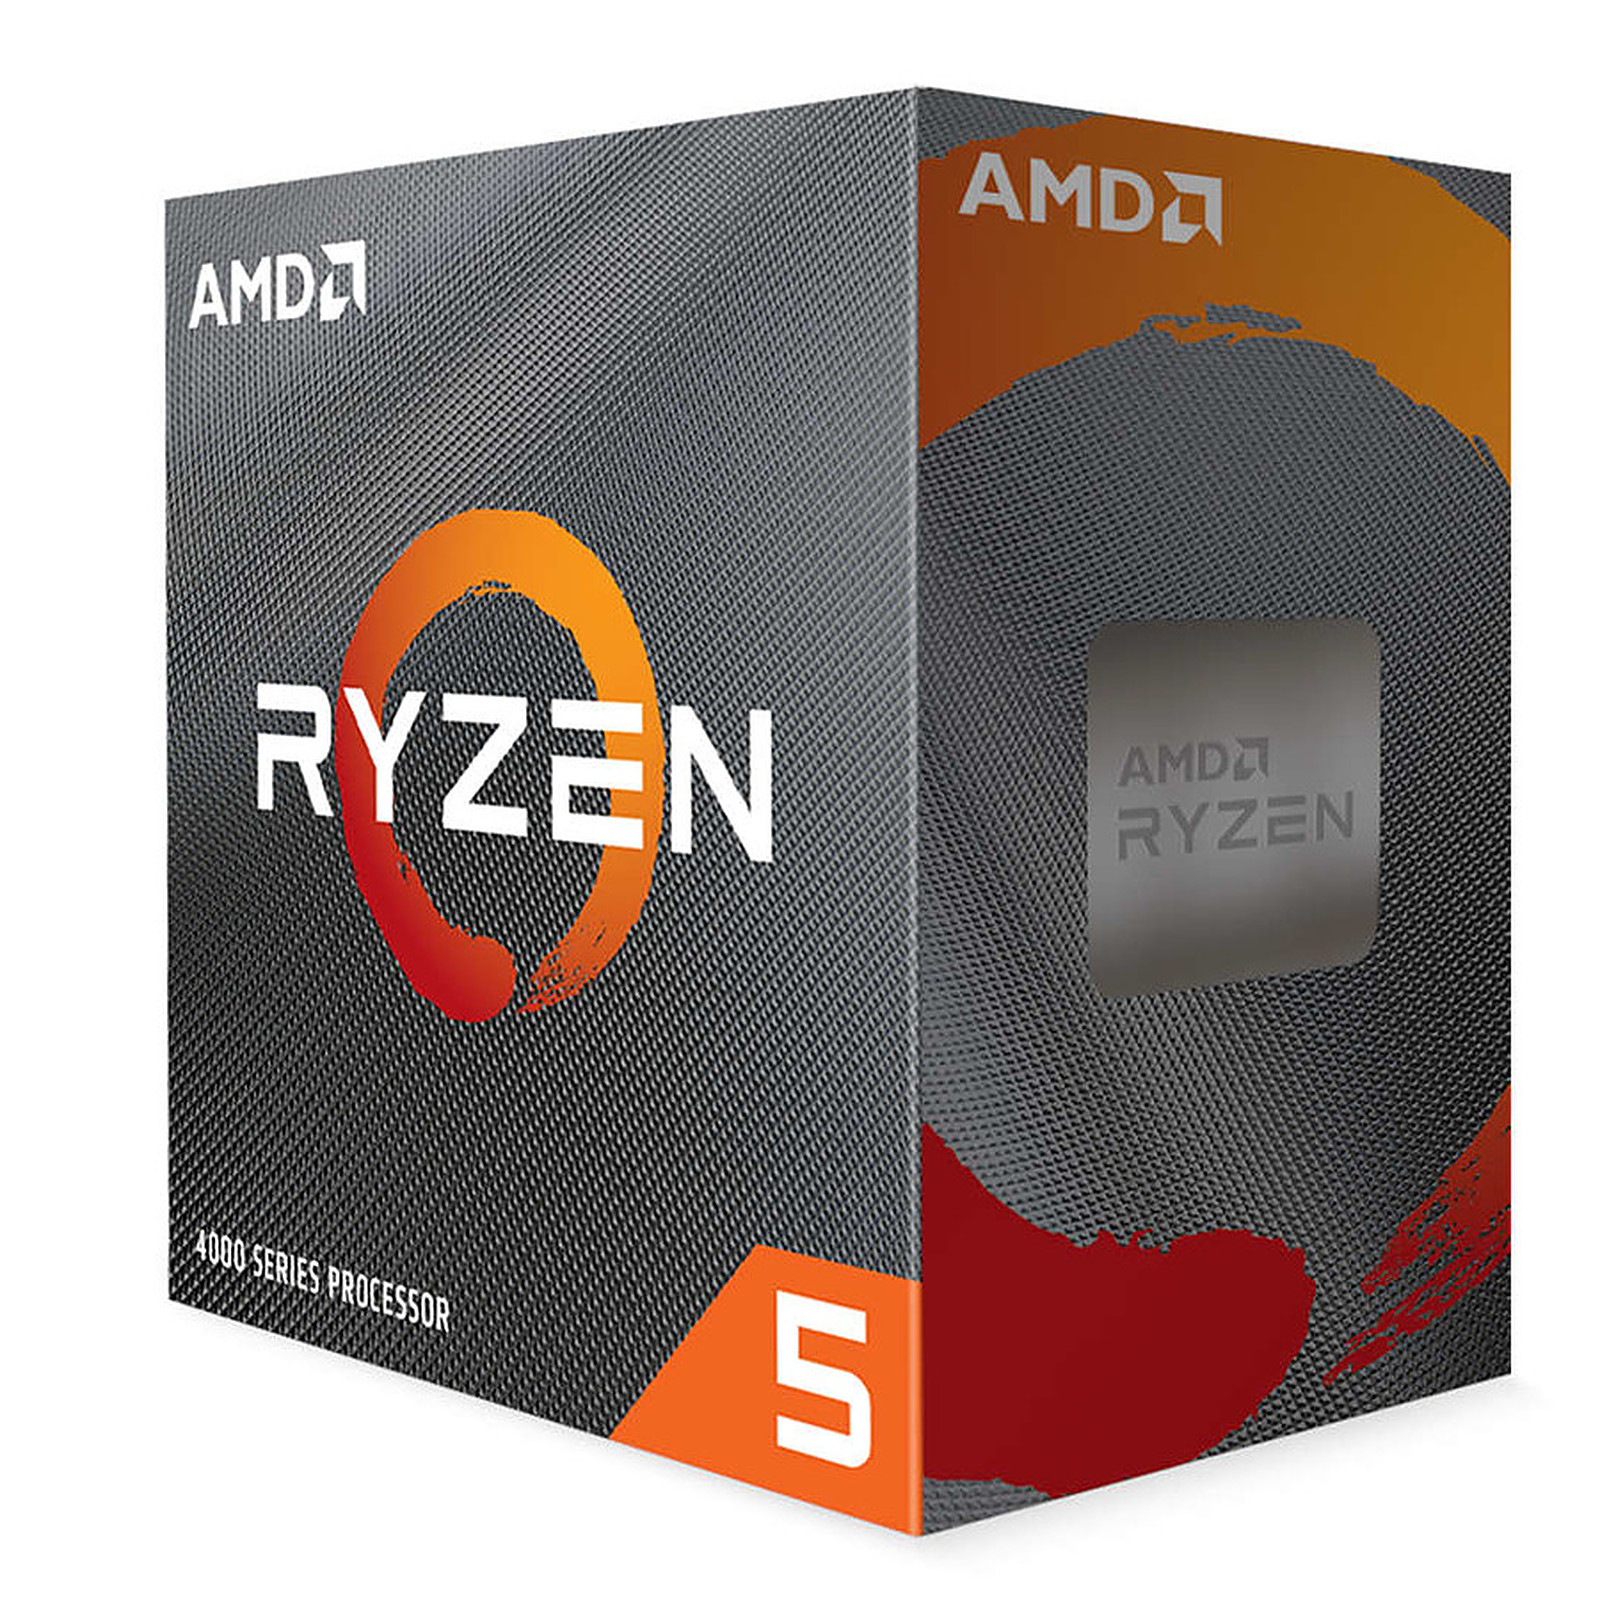 AMD RYZEN 5 4600G 6 CORES 12 THREADS DESKTOP PROCESSOR